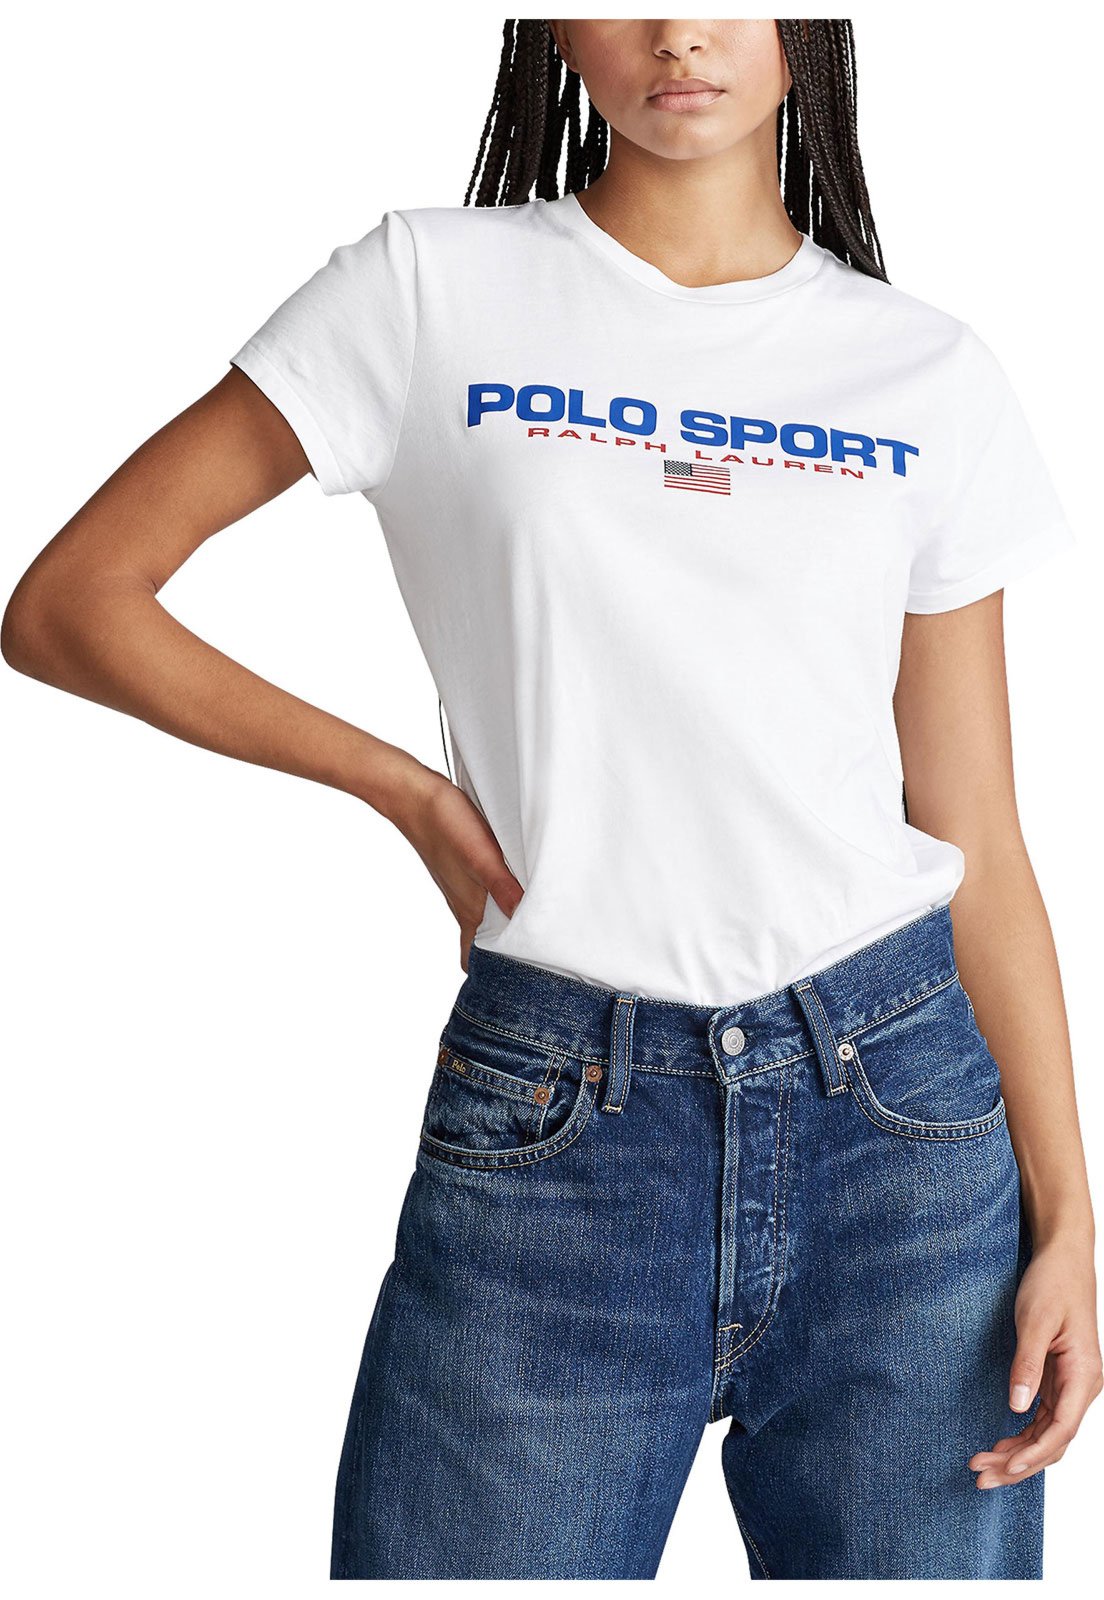 polo sport ralph lauren camiseta